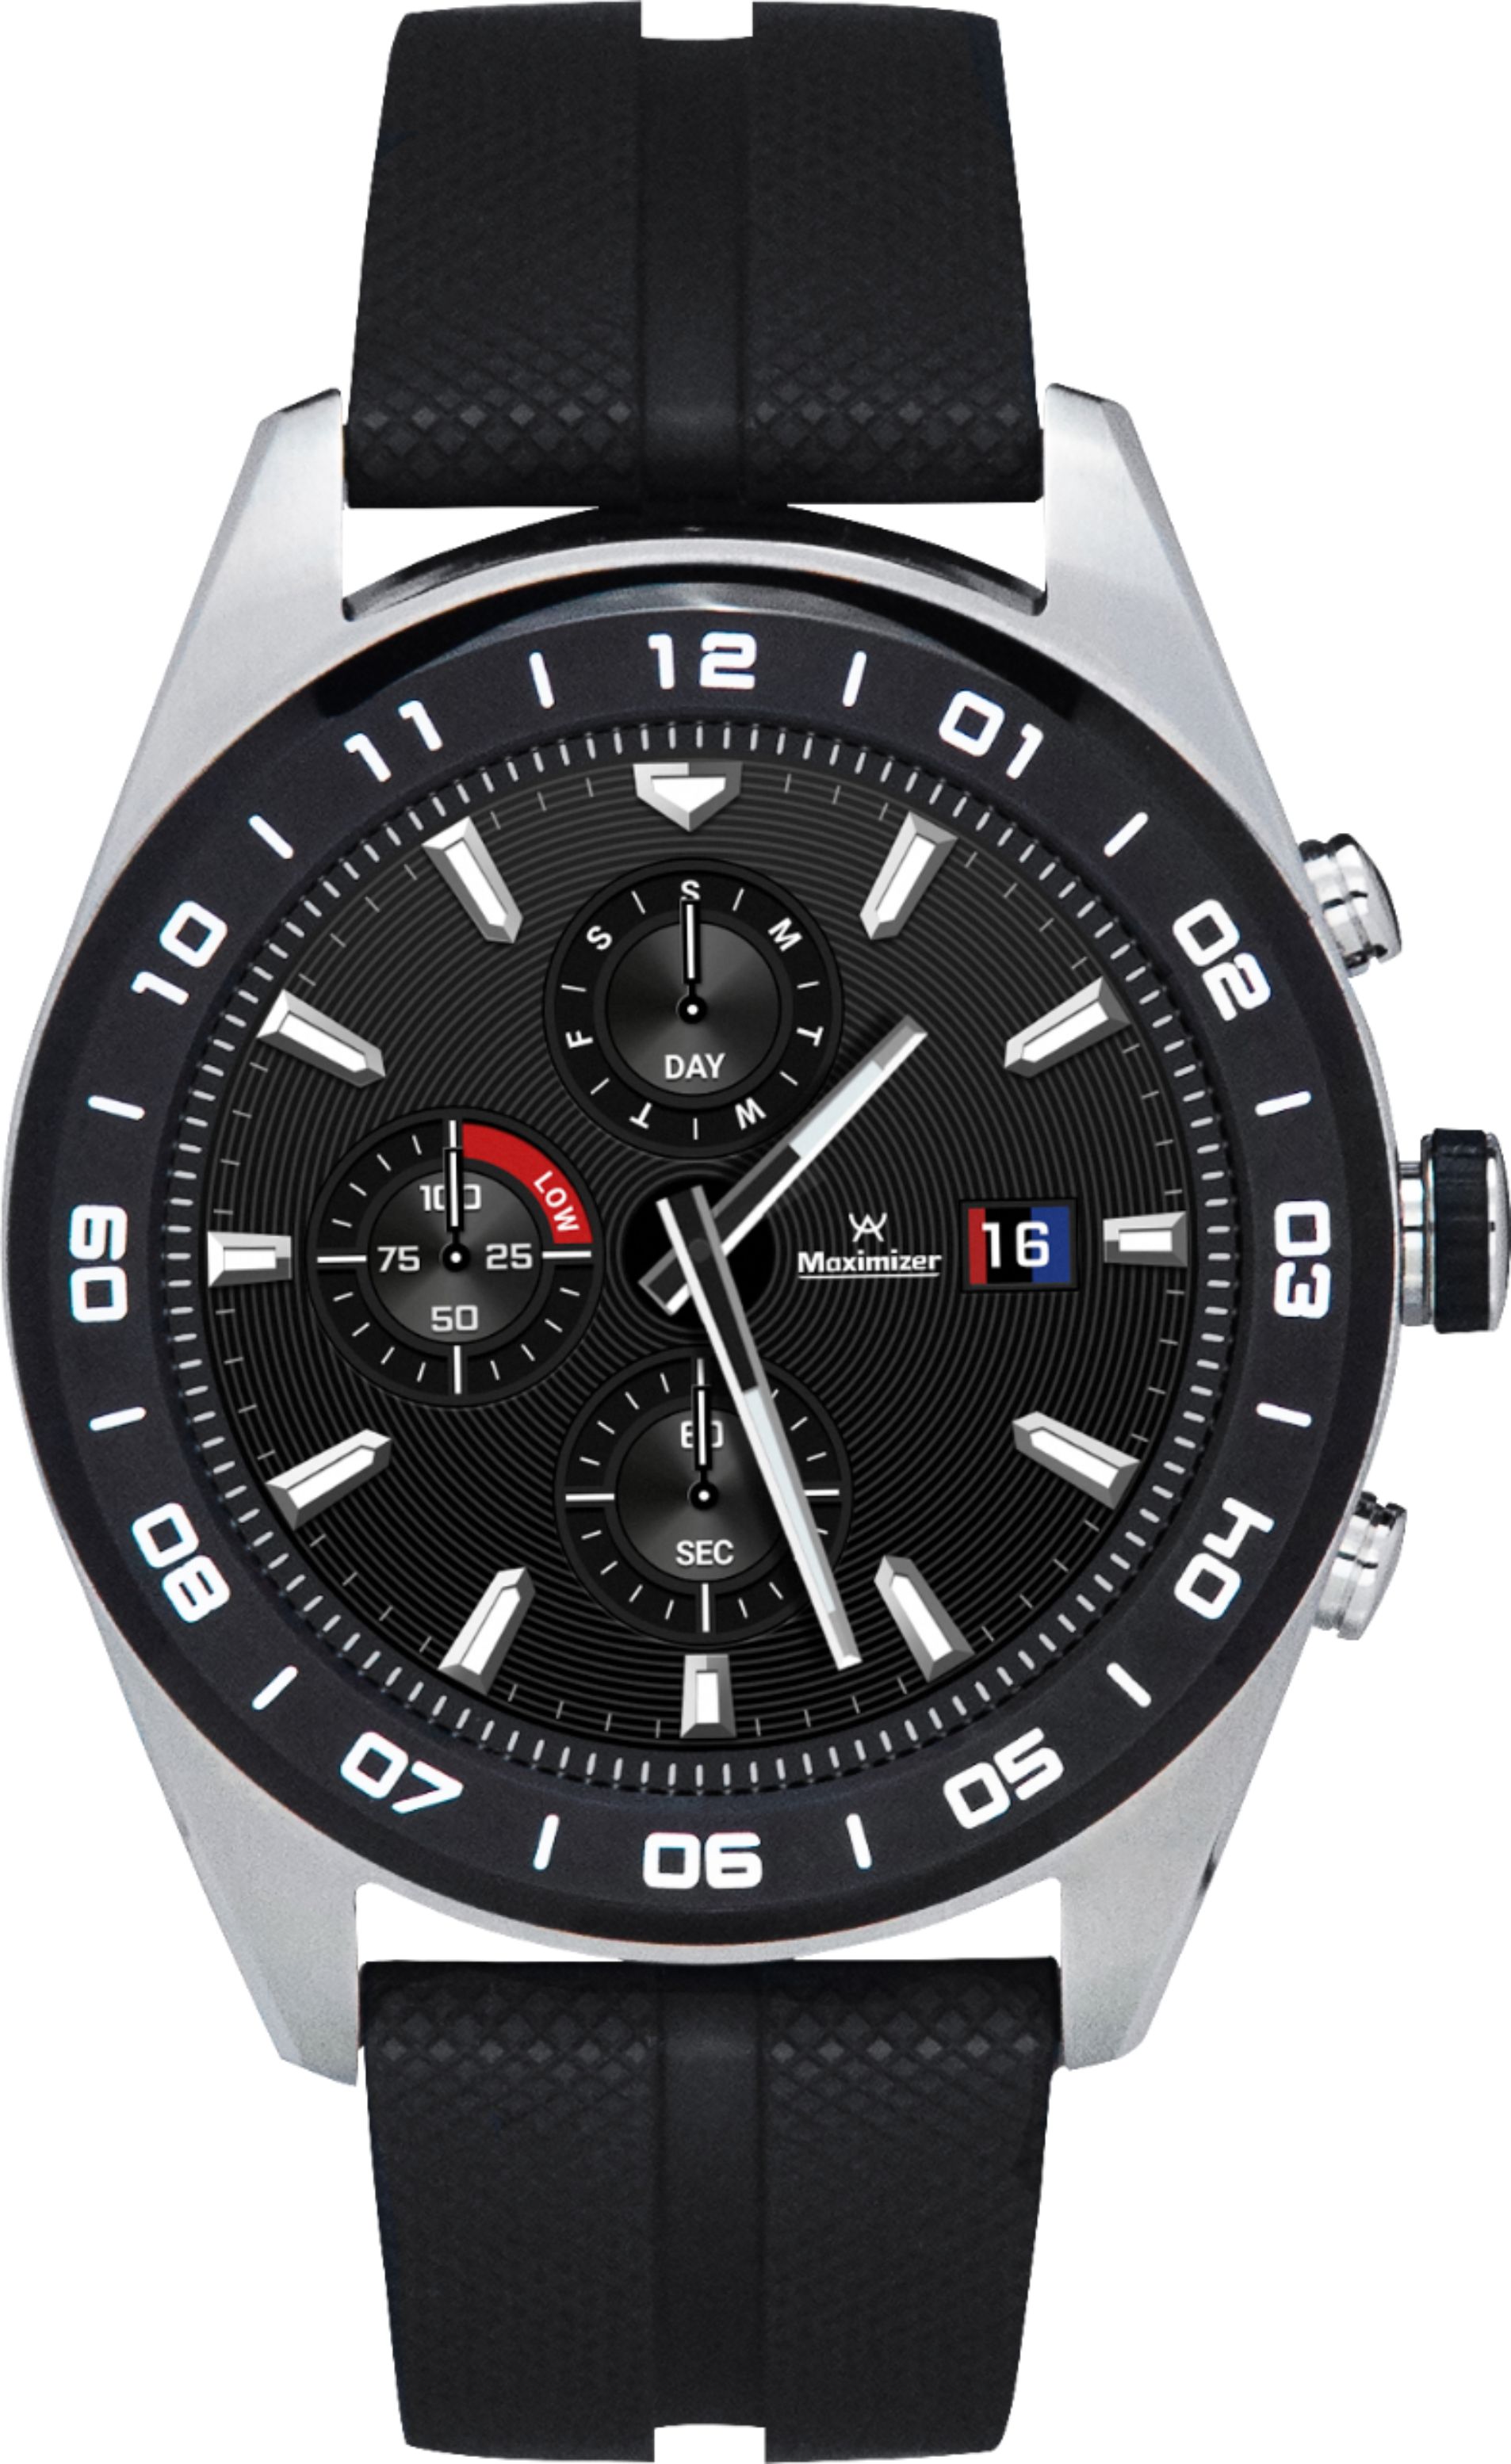 LG - Geek Squad Certified Refurbished Watch W7 Smartwatch 44.5mm Stainless Steel - Cloud Silver Rubber